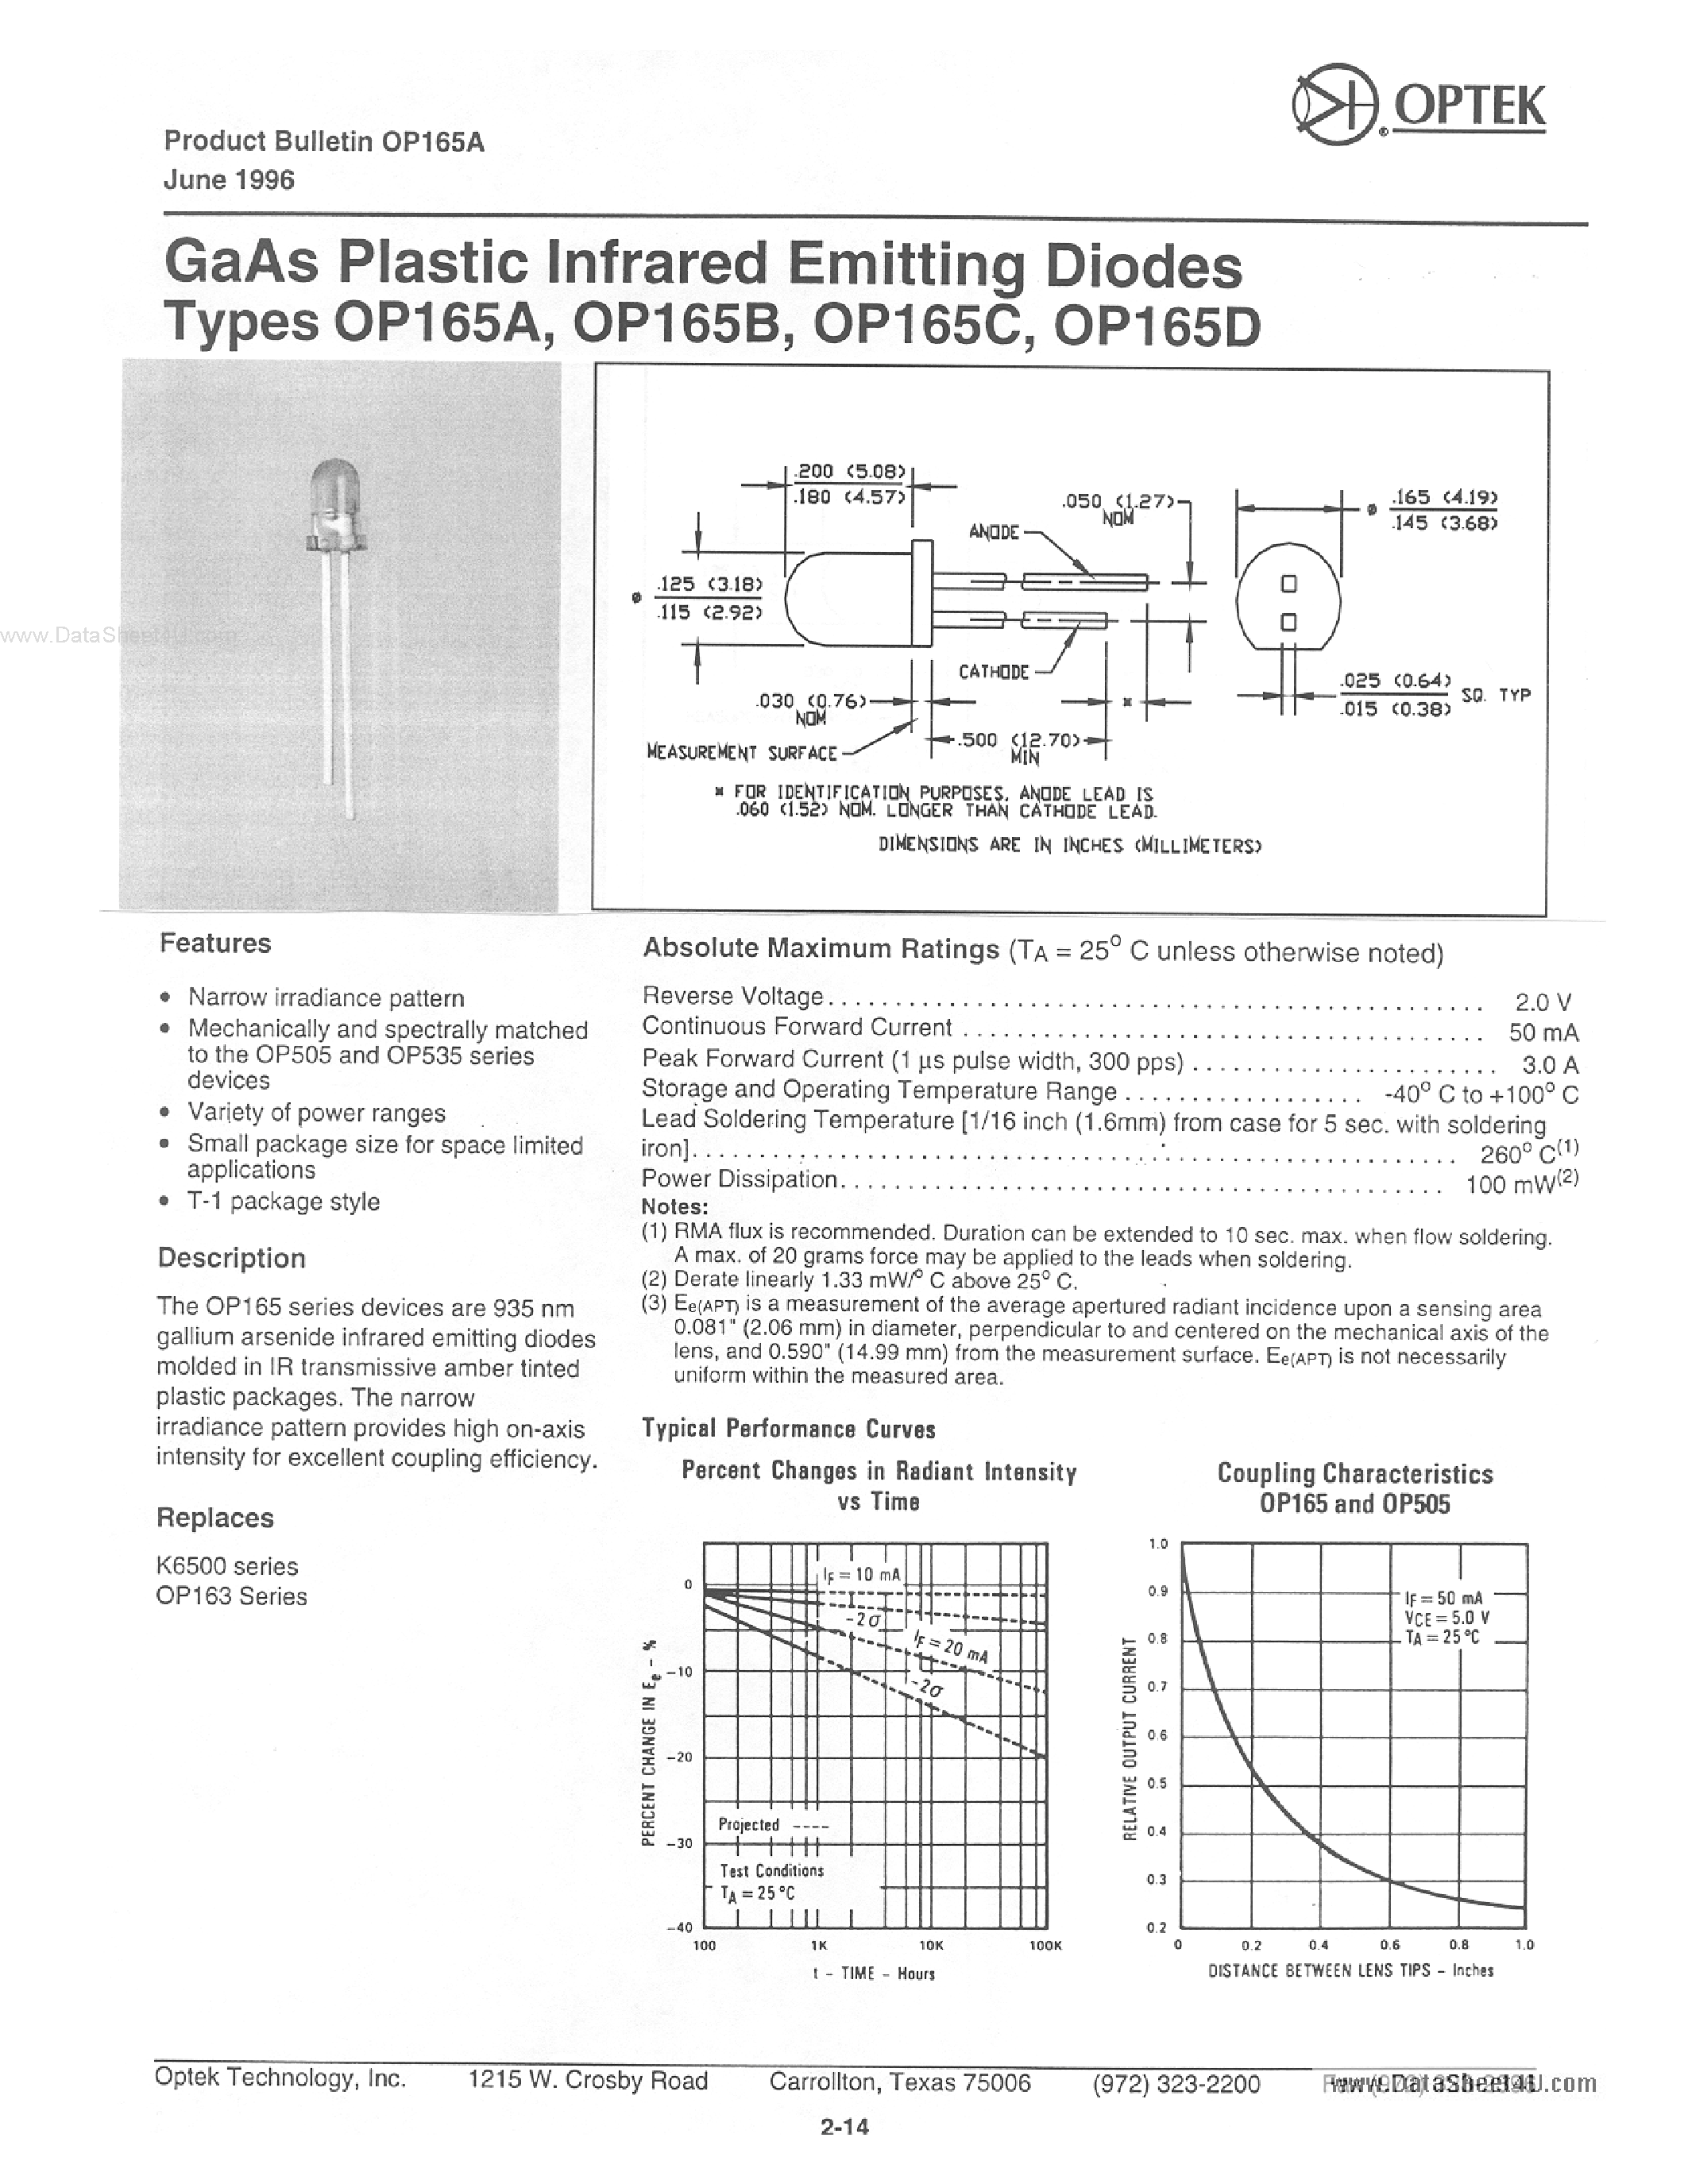 Даташит OP165A - GaAs Plastic Infrared Emitting Diodes страница 1